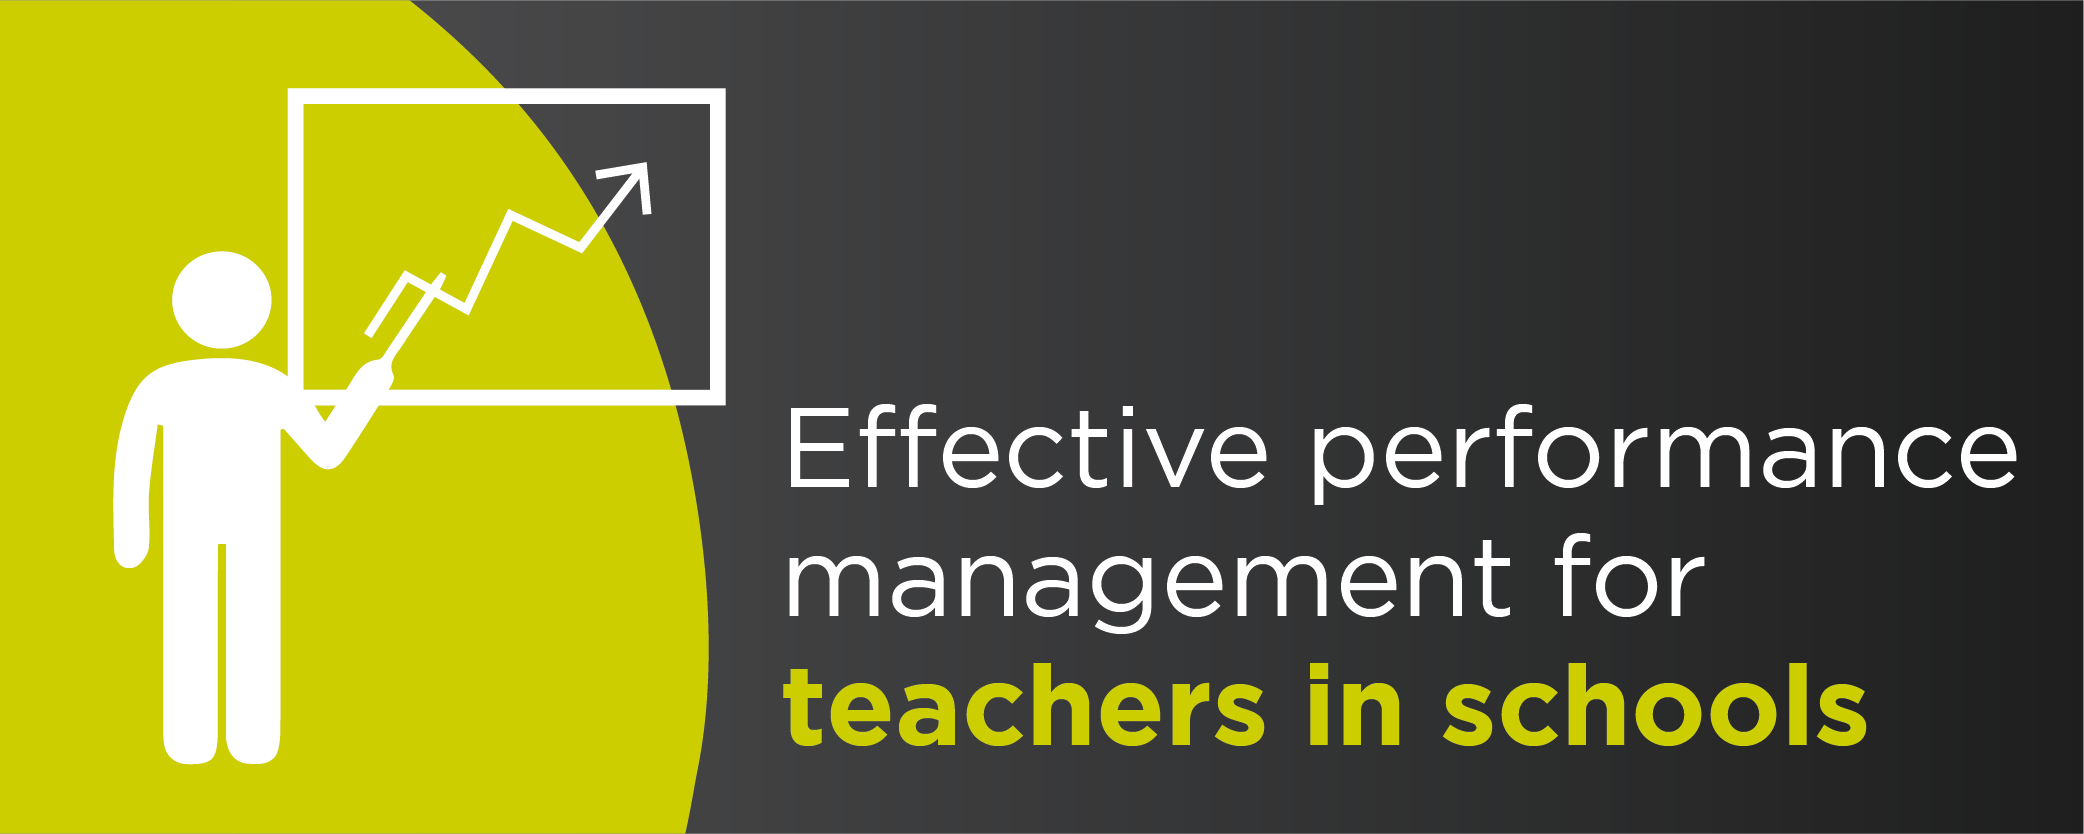 Effective performance management for teachers in schools